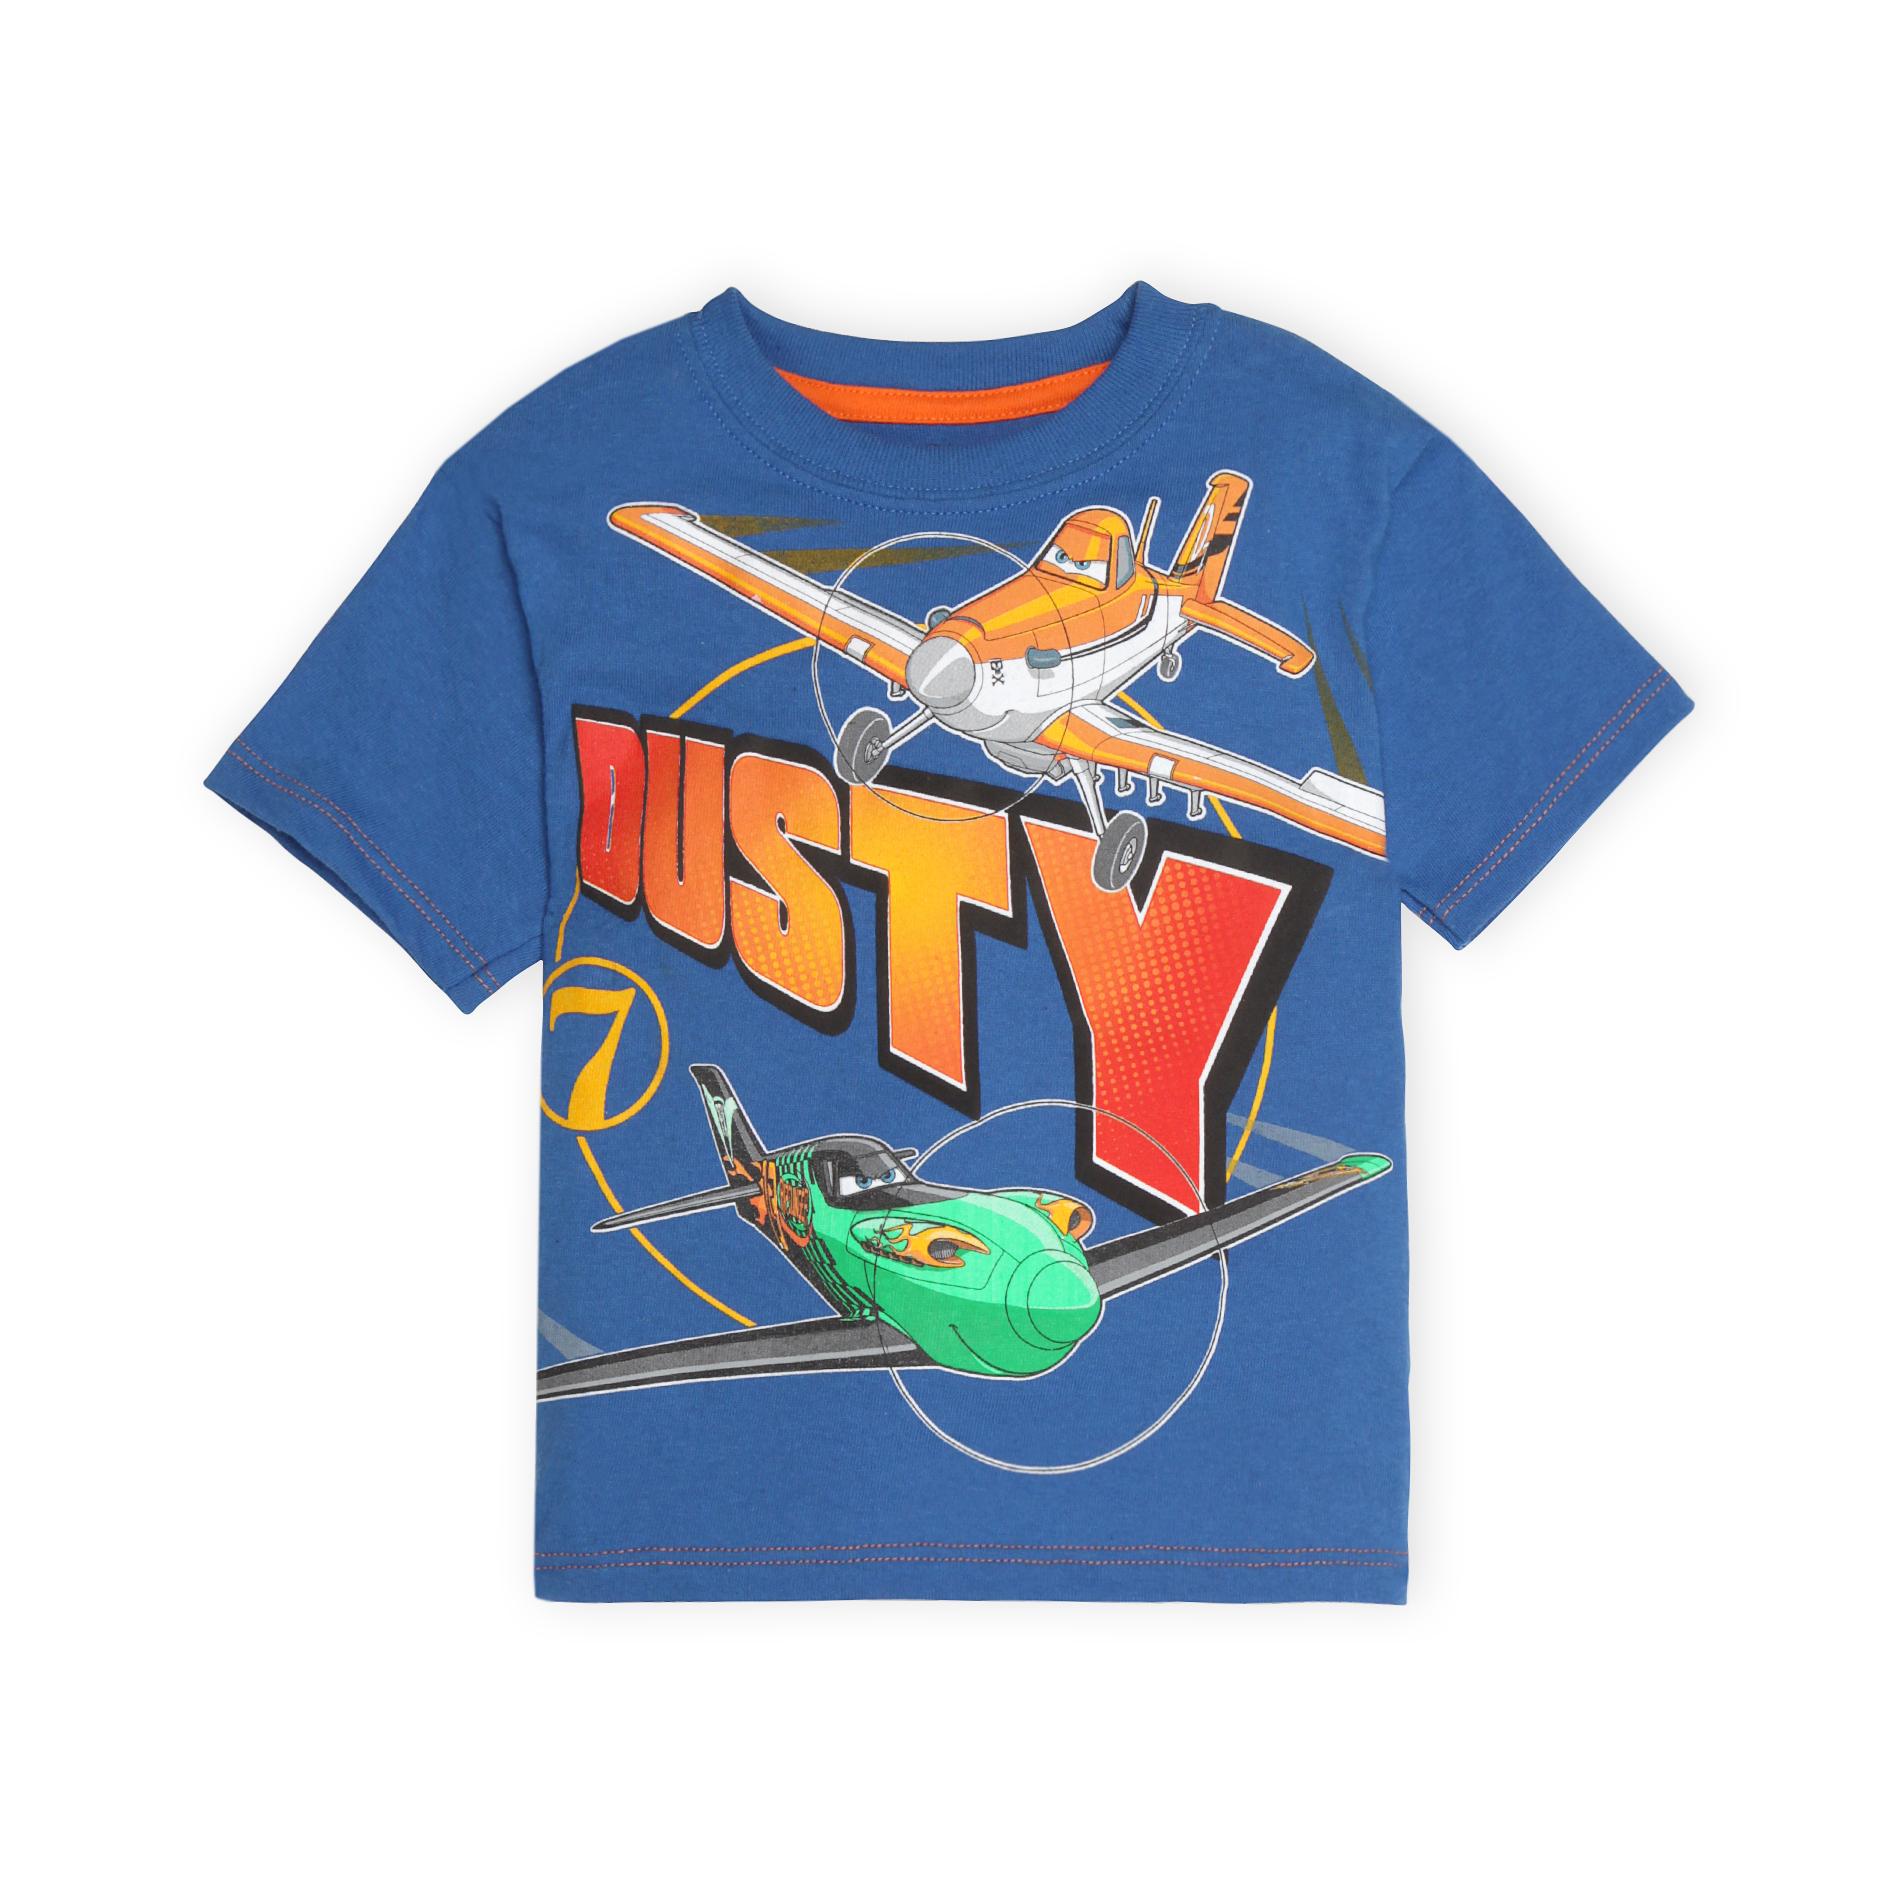 Disney Toddler Boy's Graphic T-Shirt - Planes